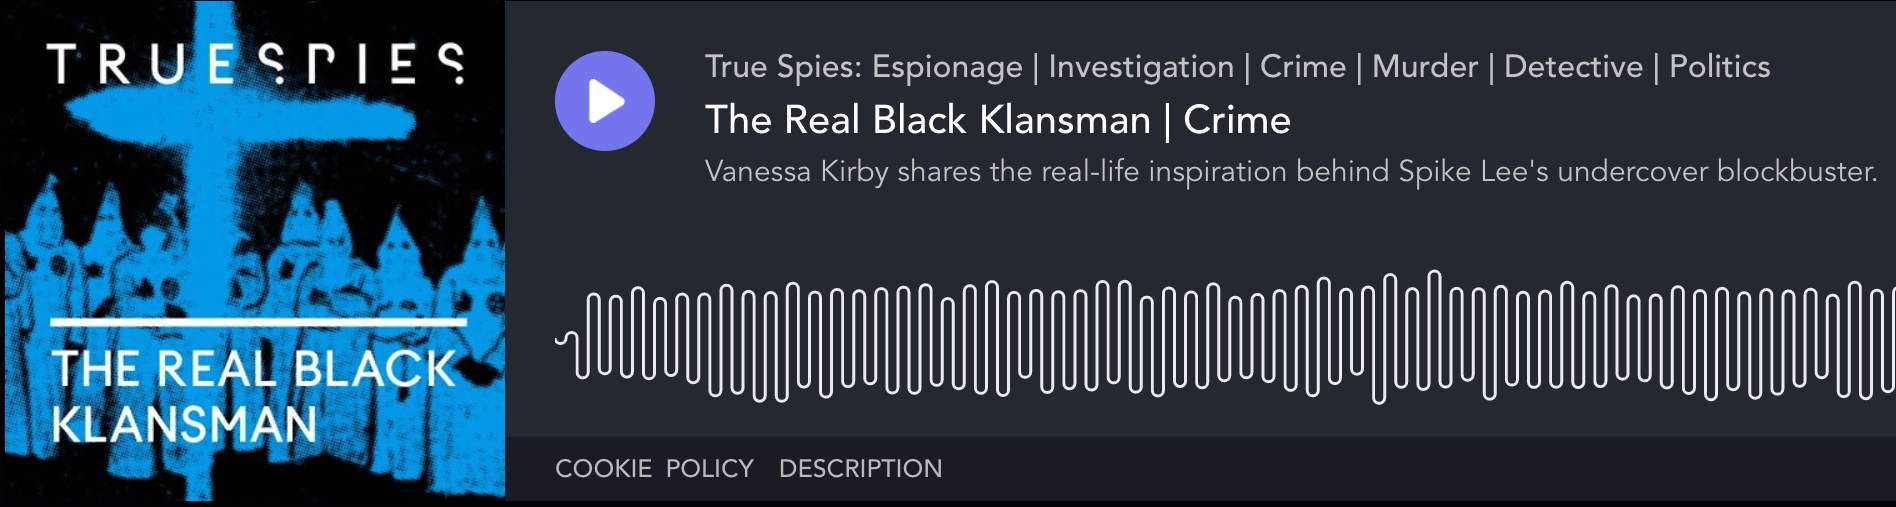 The Real Black Klansman podcast on True Spies